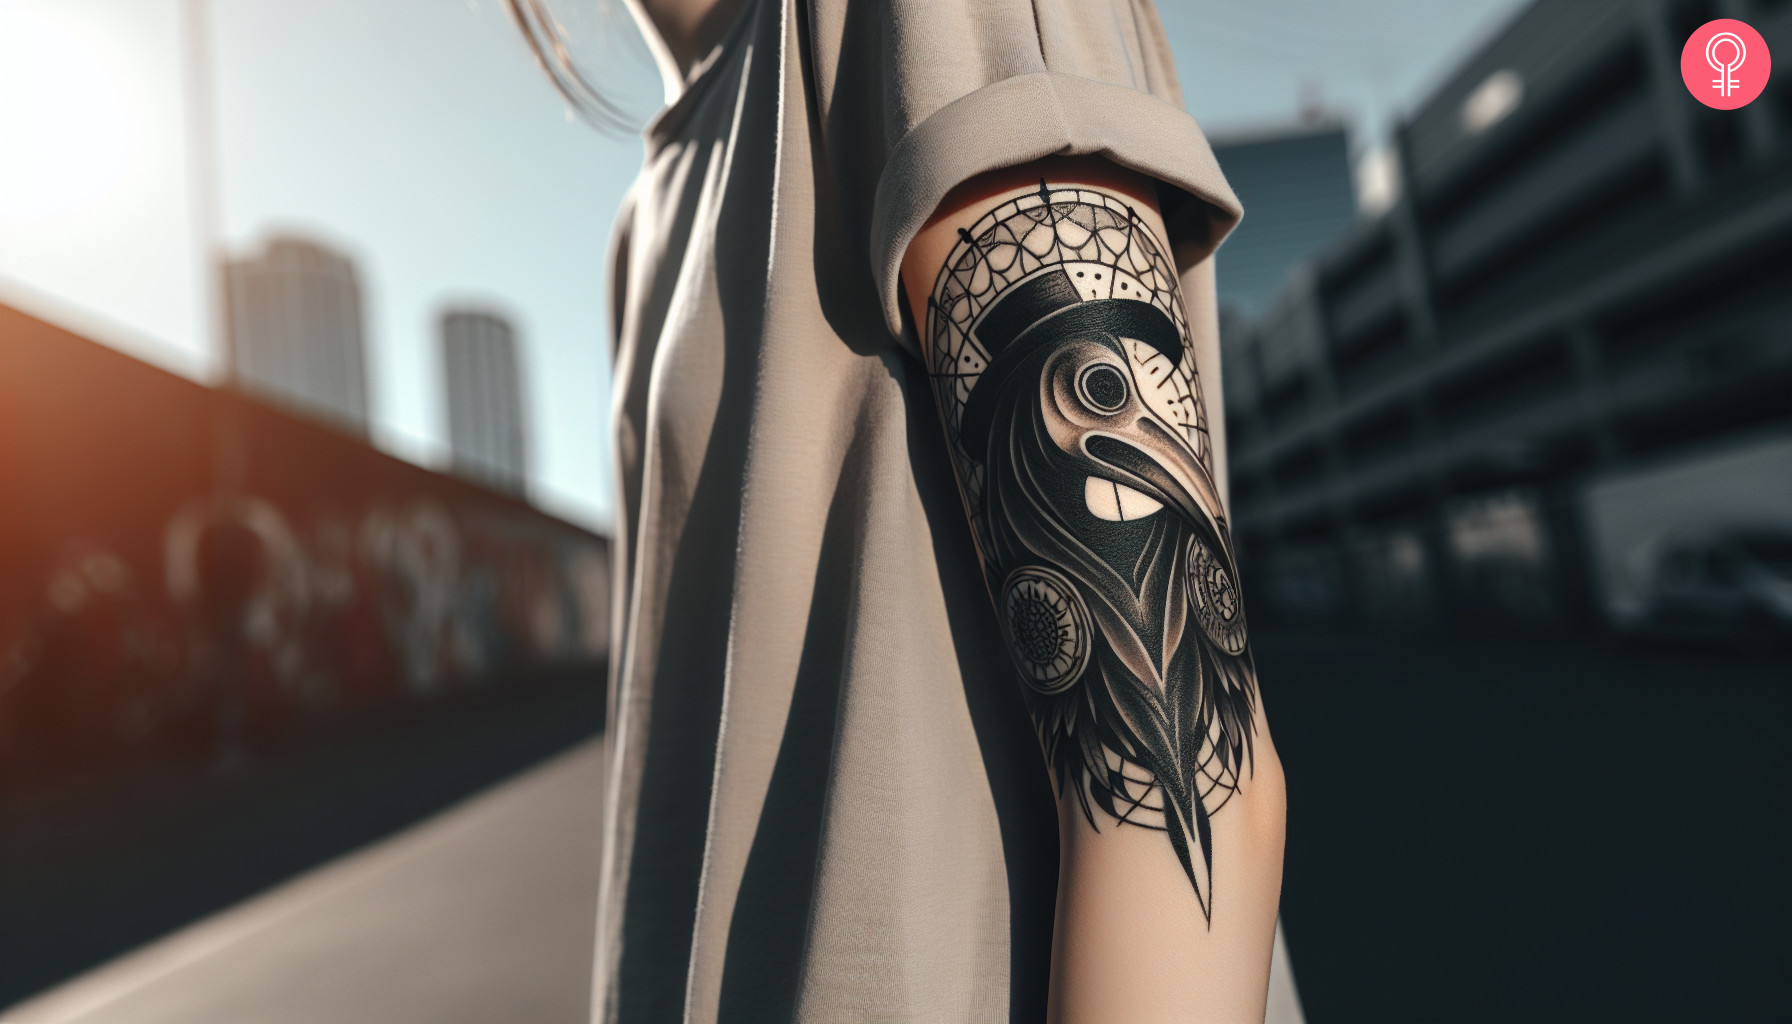 Plague doctor half-sleeve tattoo